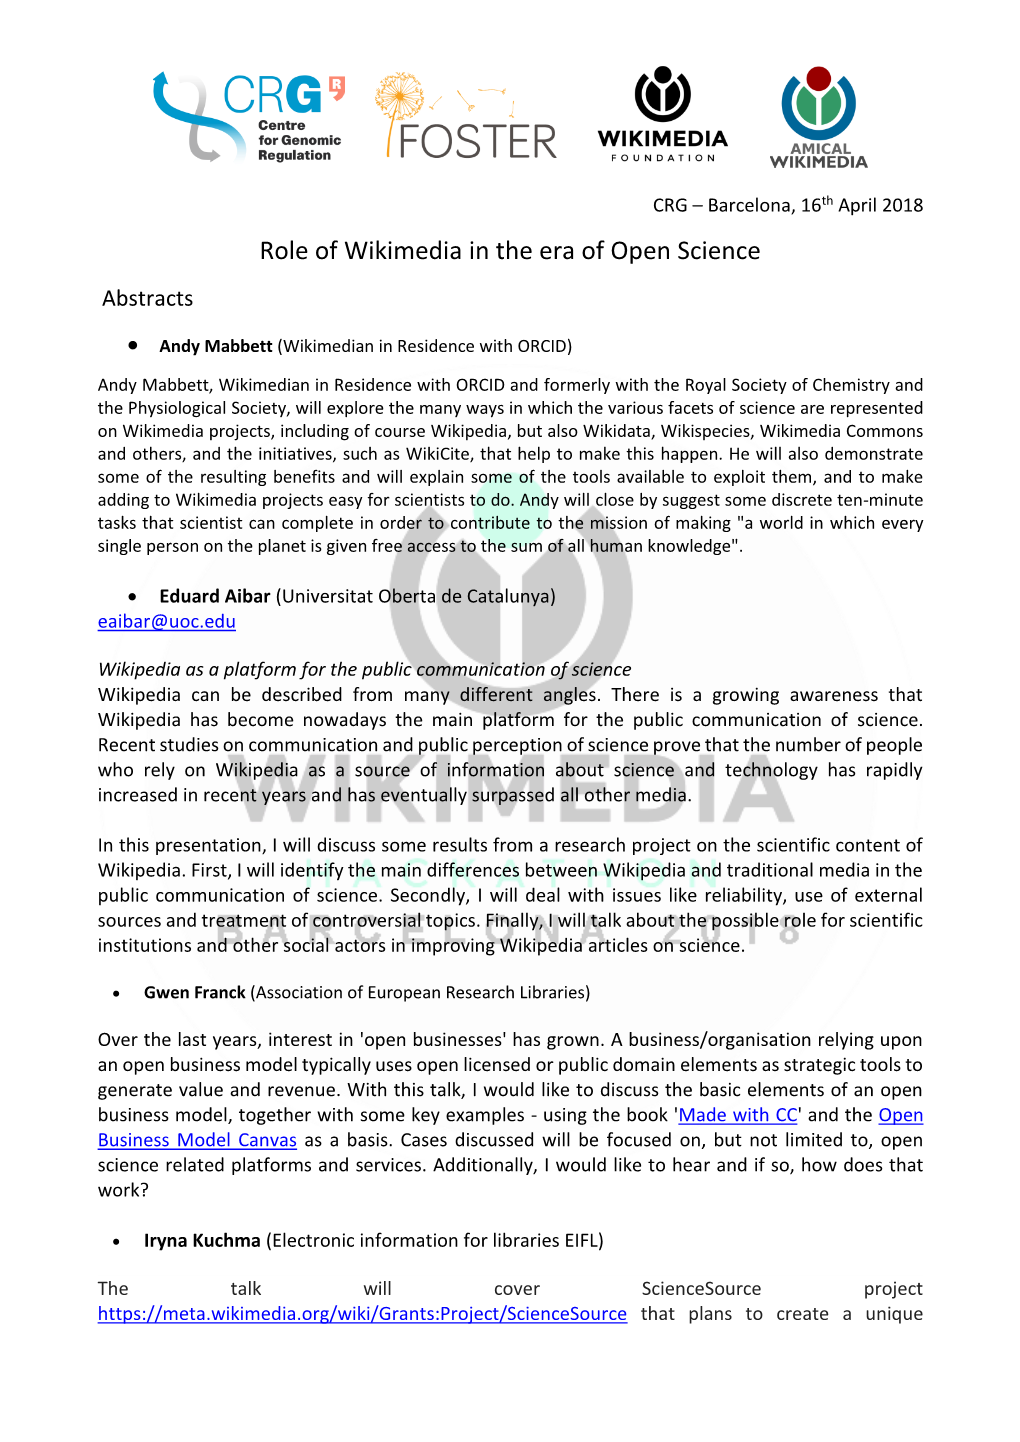 Role of Wikimedia in the Era of Open Science